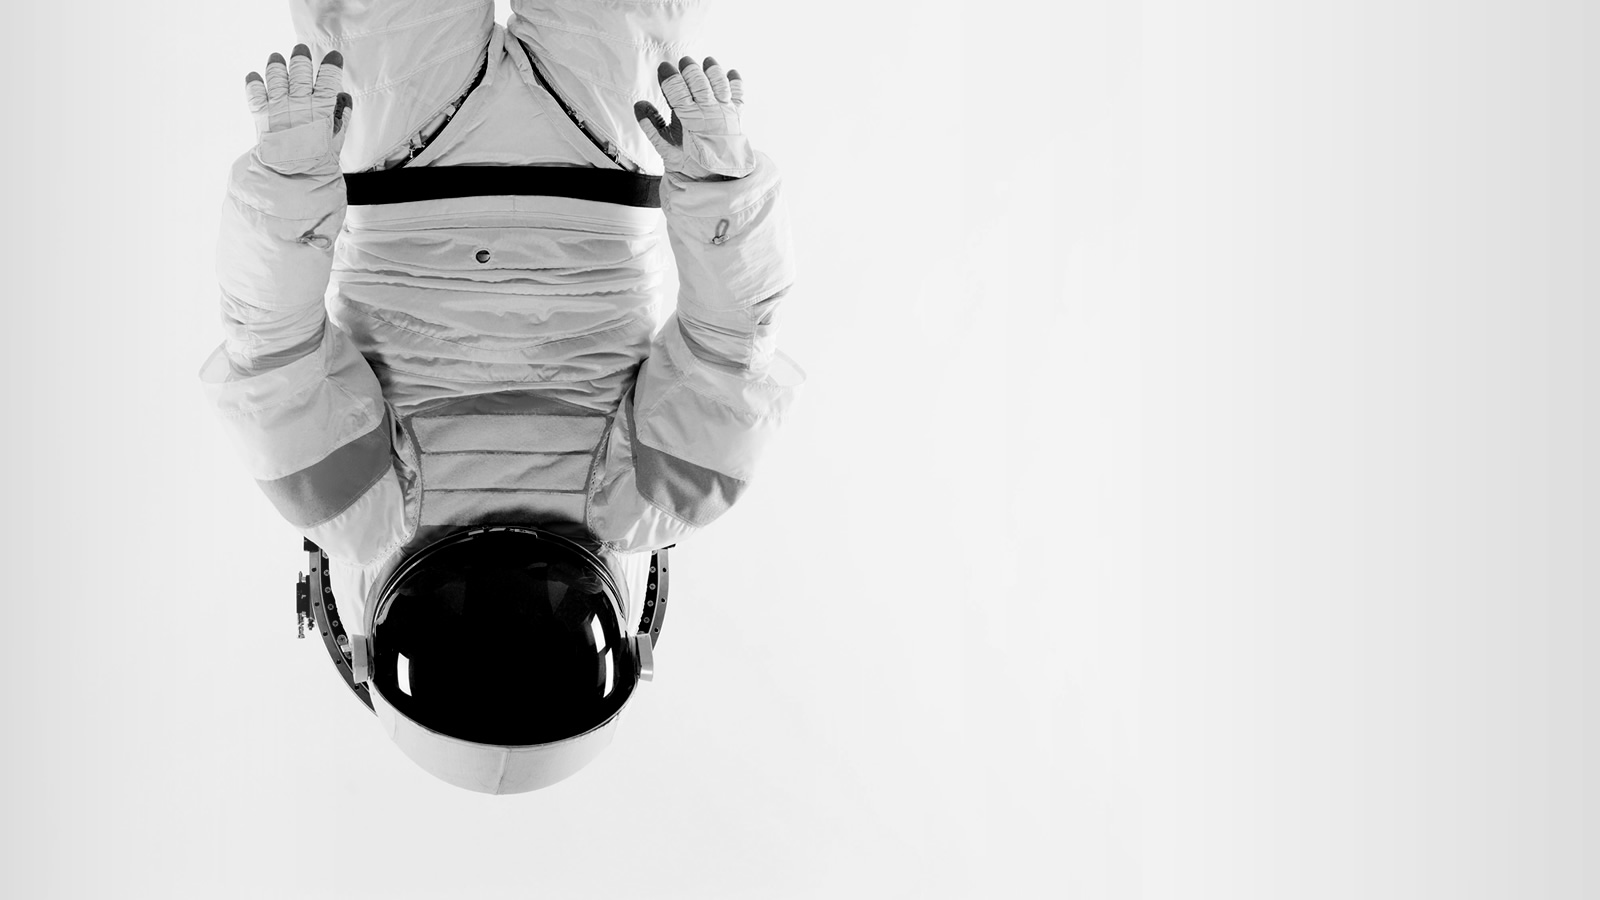 An astronaut oriented upside-down